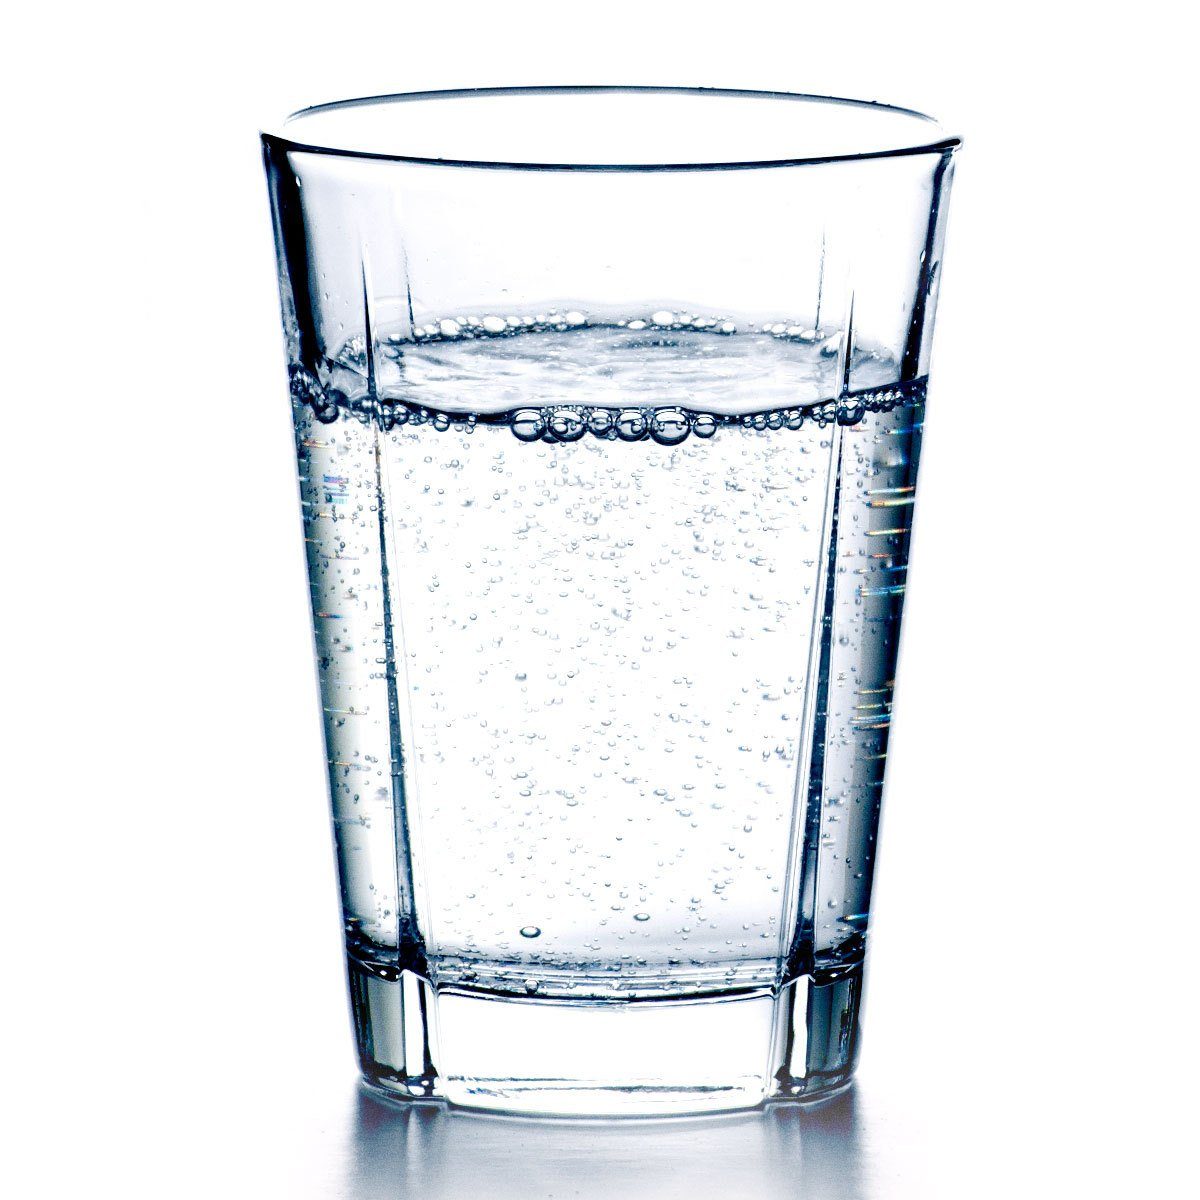 GRAND Glas Set, Wassergläser 6er 22cl Rosendahl Glas CRU -